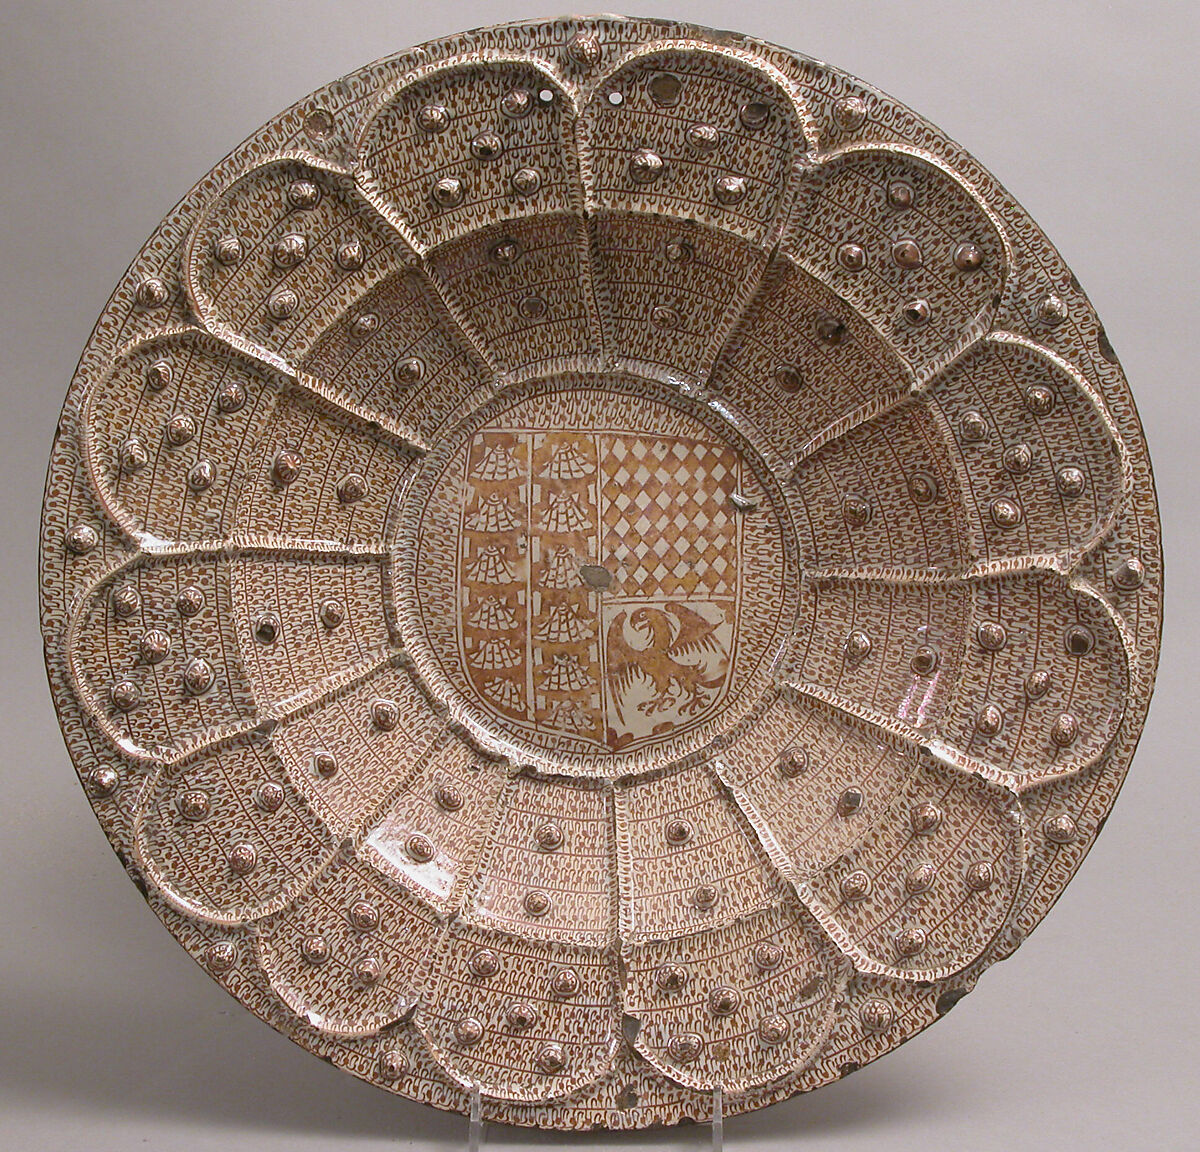 Dish with Heraldic Shield, Tin-glazed earthenware, Spanish 